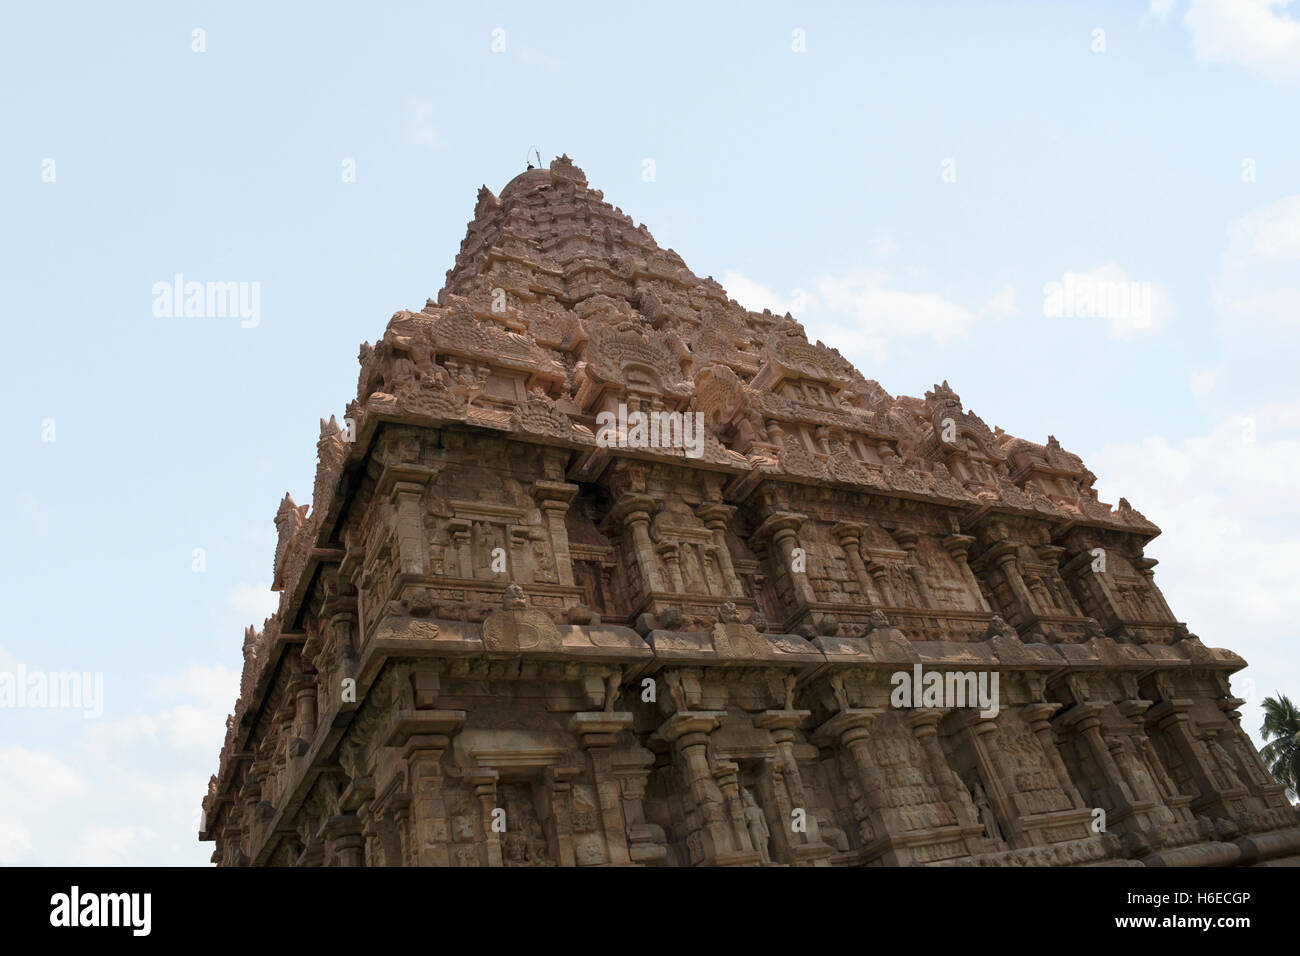 Temple de Brihadisvara, gangaikondacholapuram, Tamil Nadu, Inde. vue depuis le nord-ouest. Banque D'Images